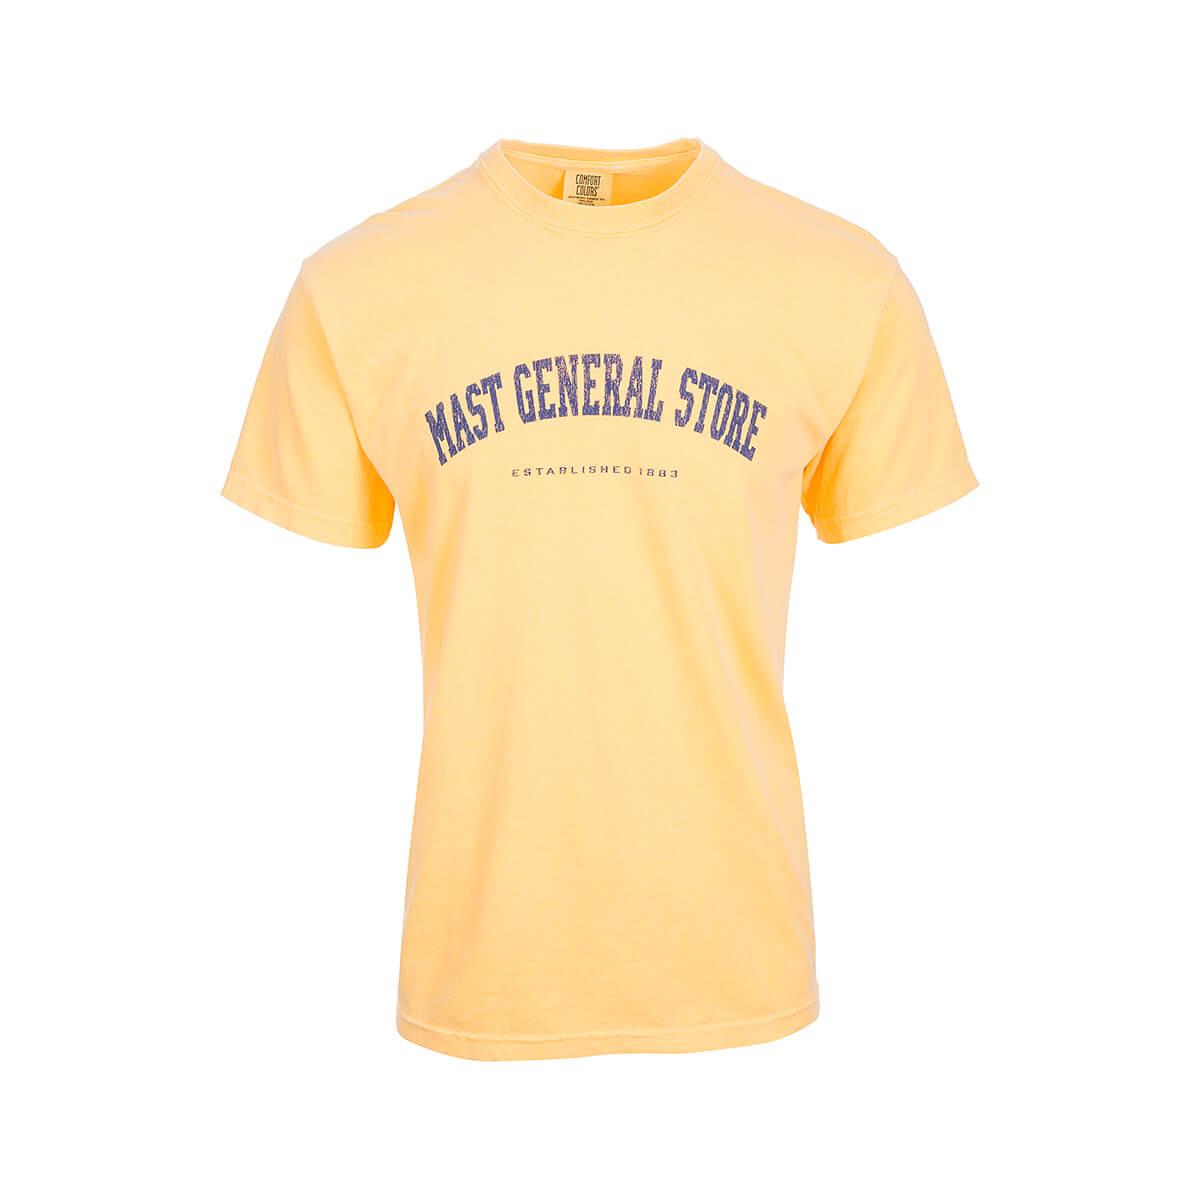  Mast General Store Est 1883 Short Sleeve T- Shirt